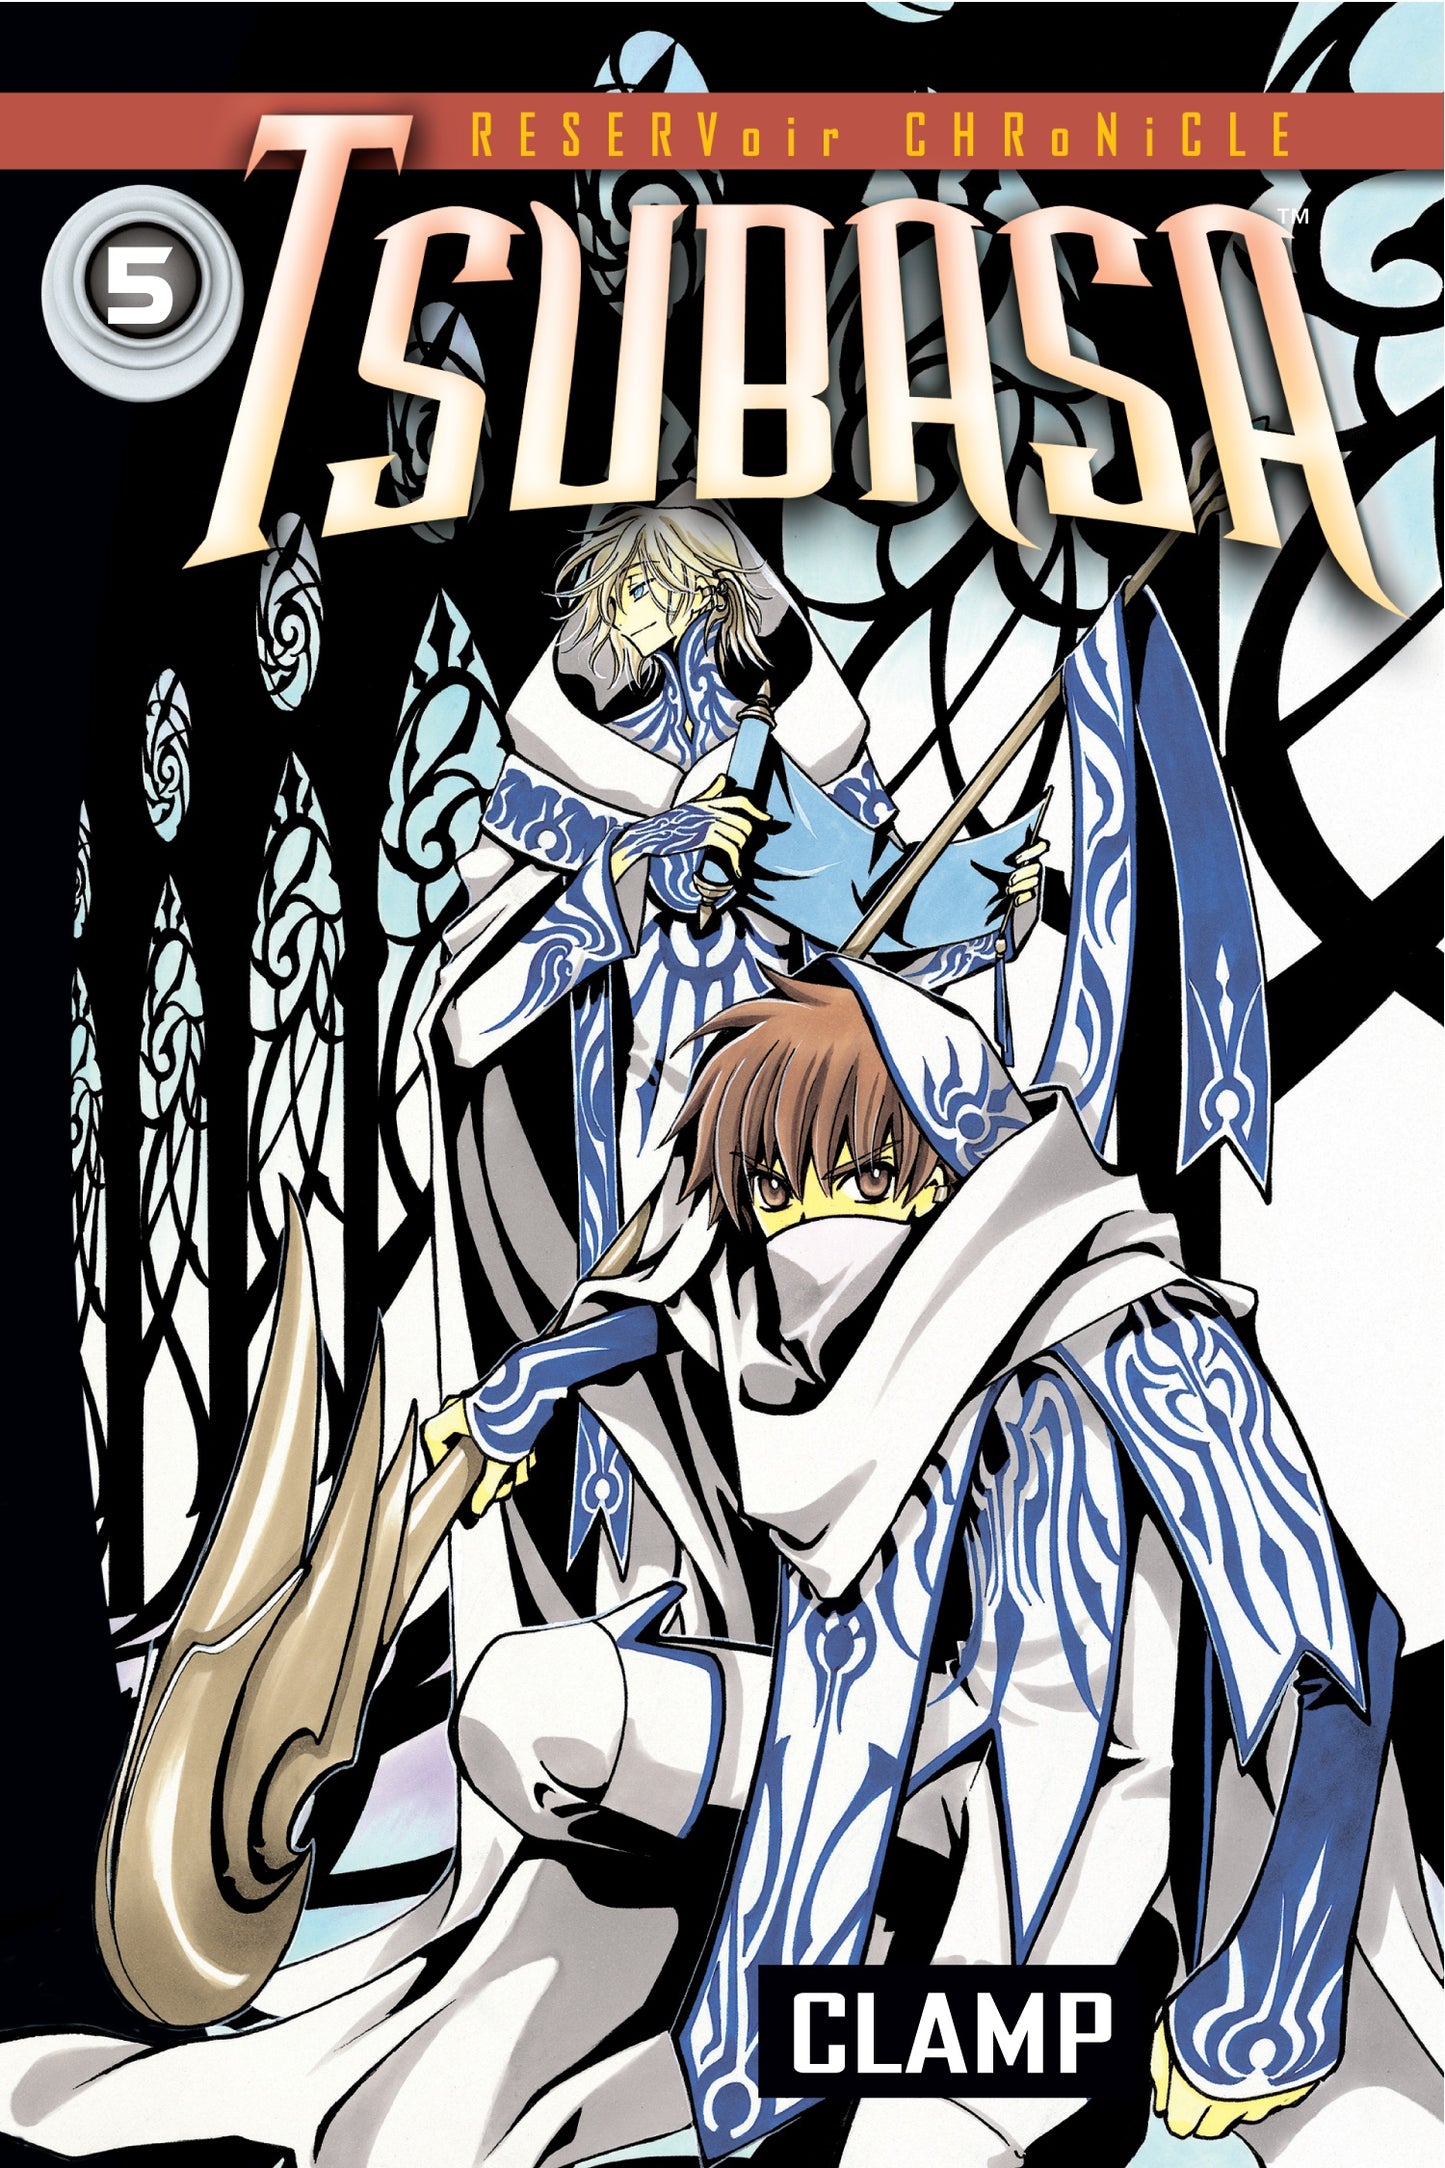 Tsubasa volume 5 - Manga Warehouse